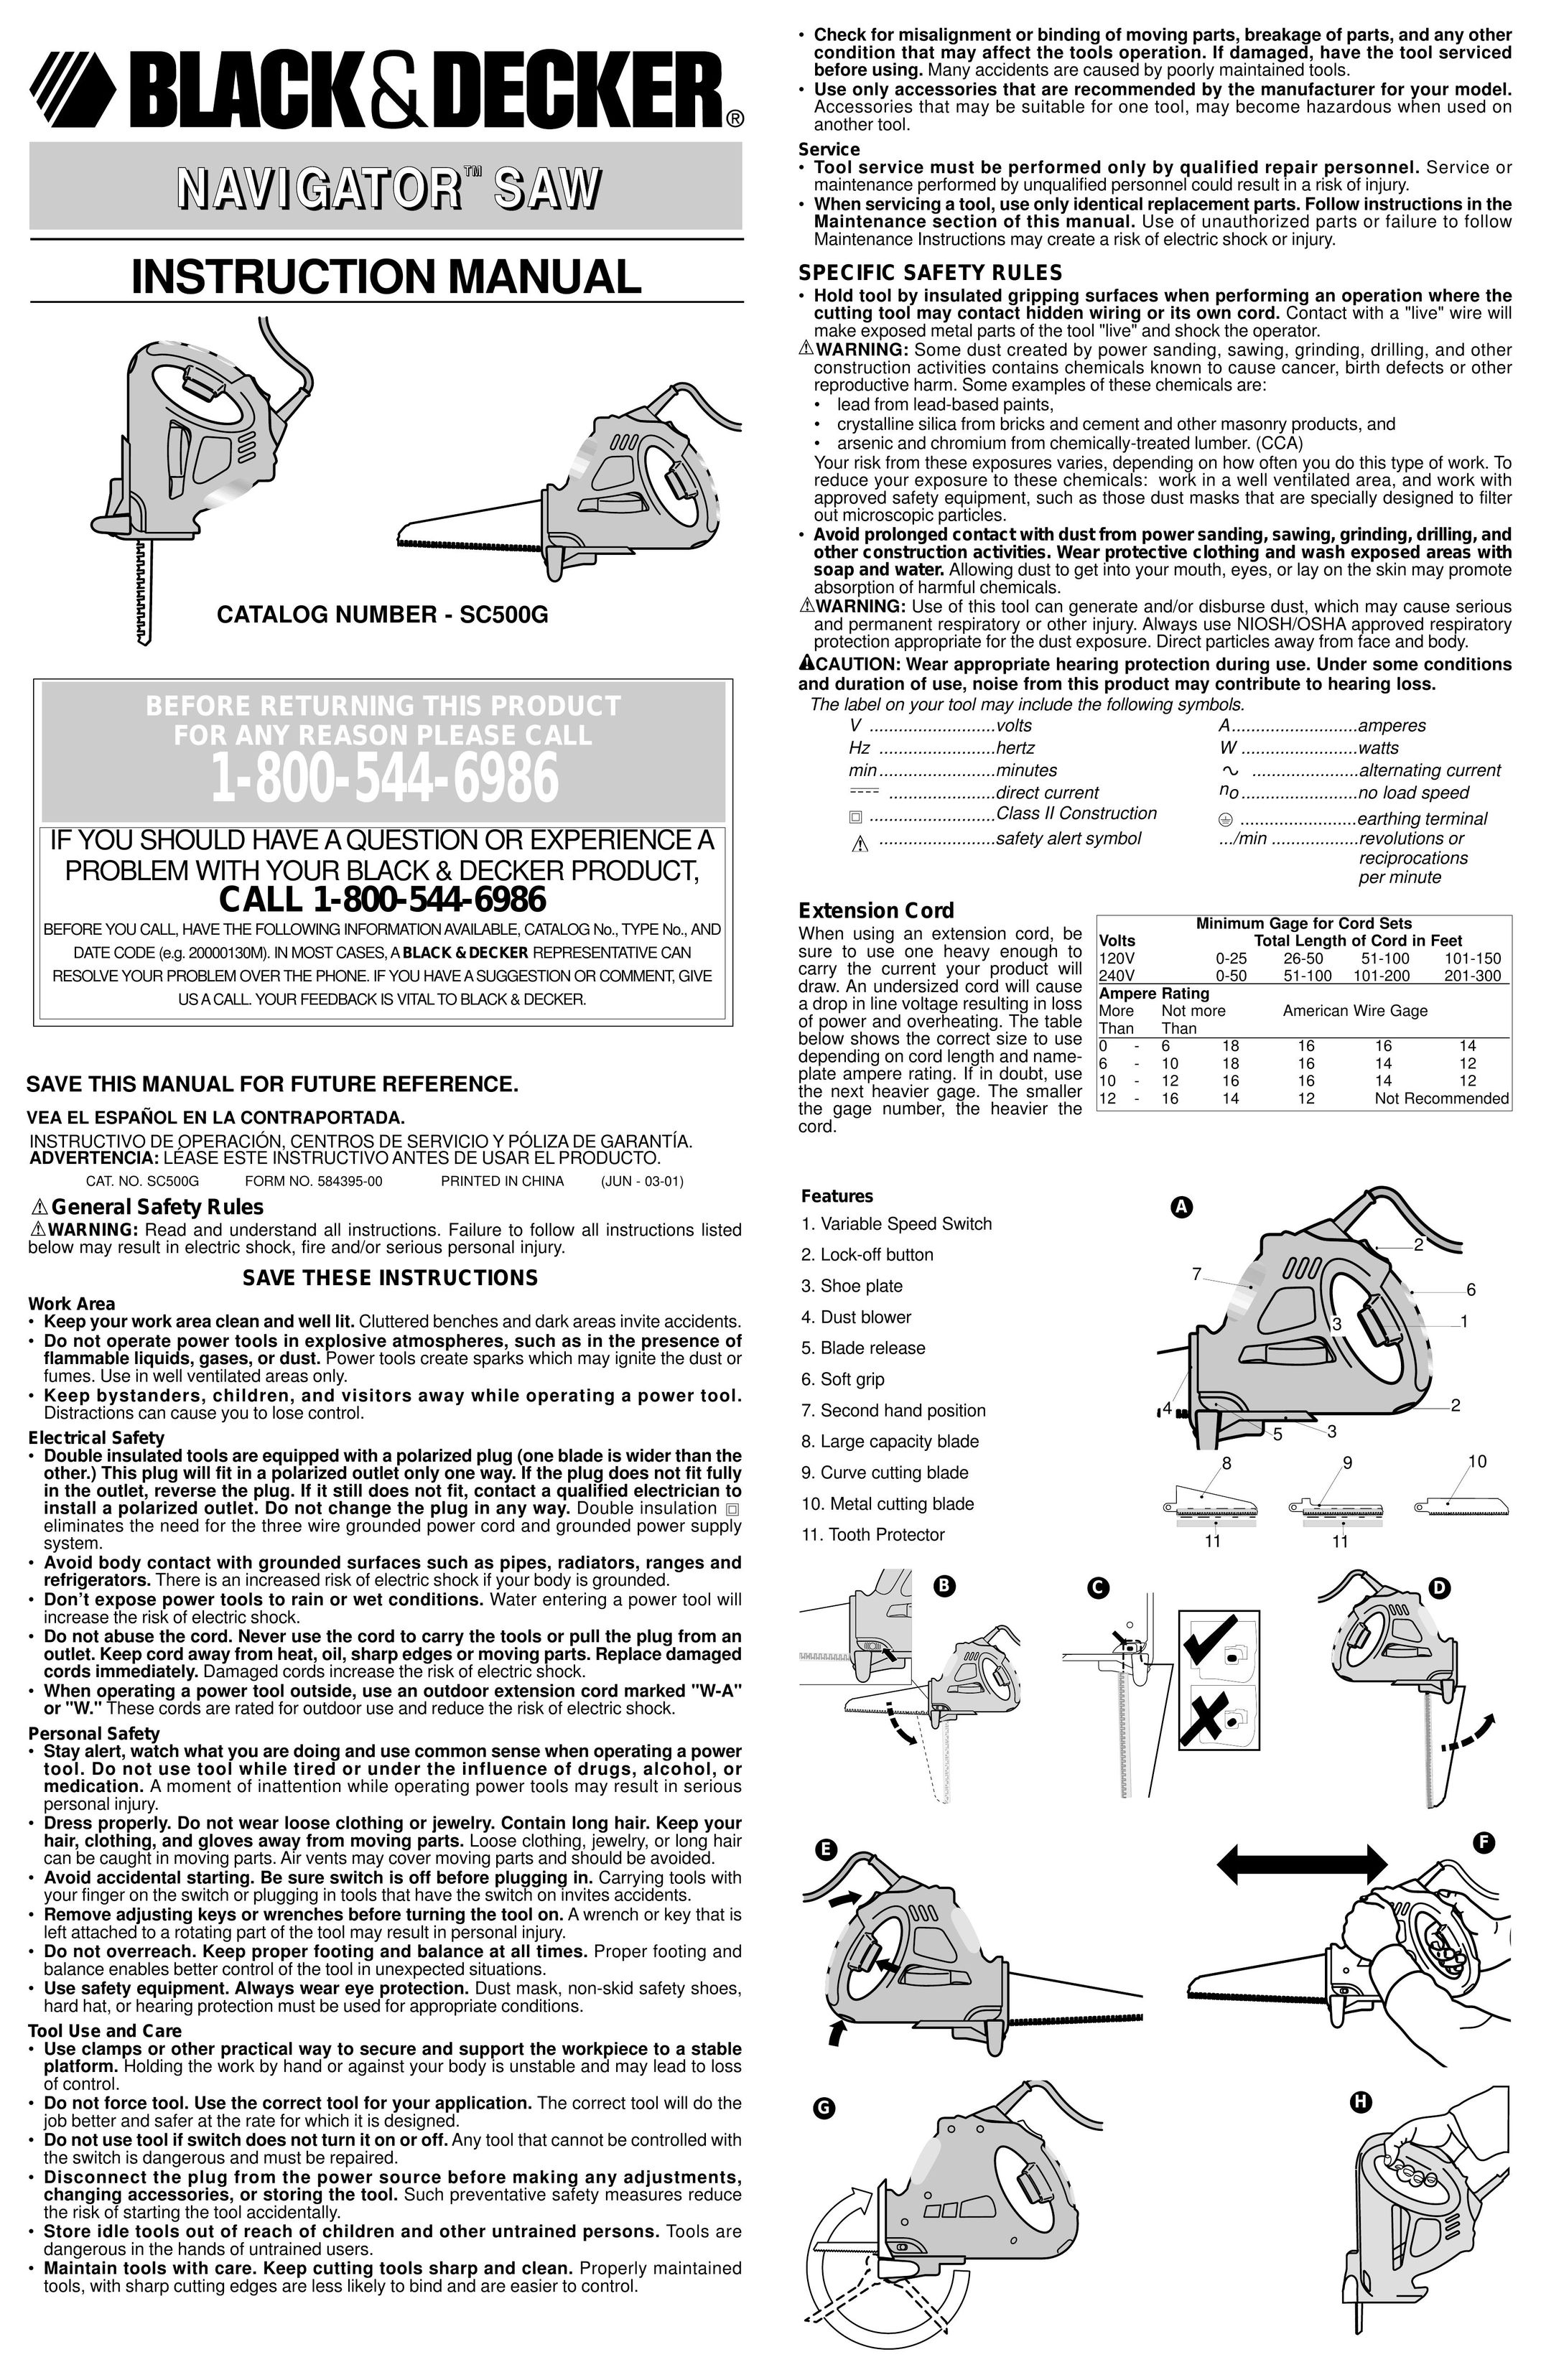 Black & Decker 584395-00 Saw User Manual